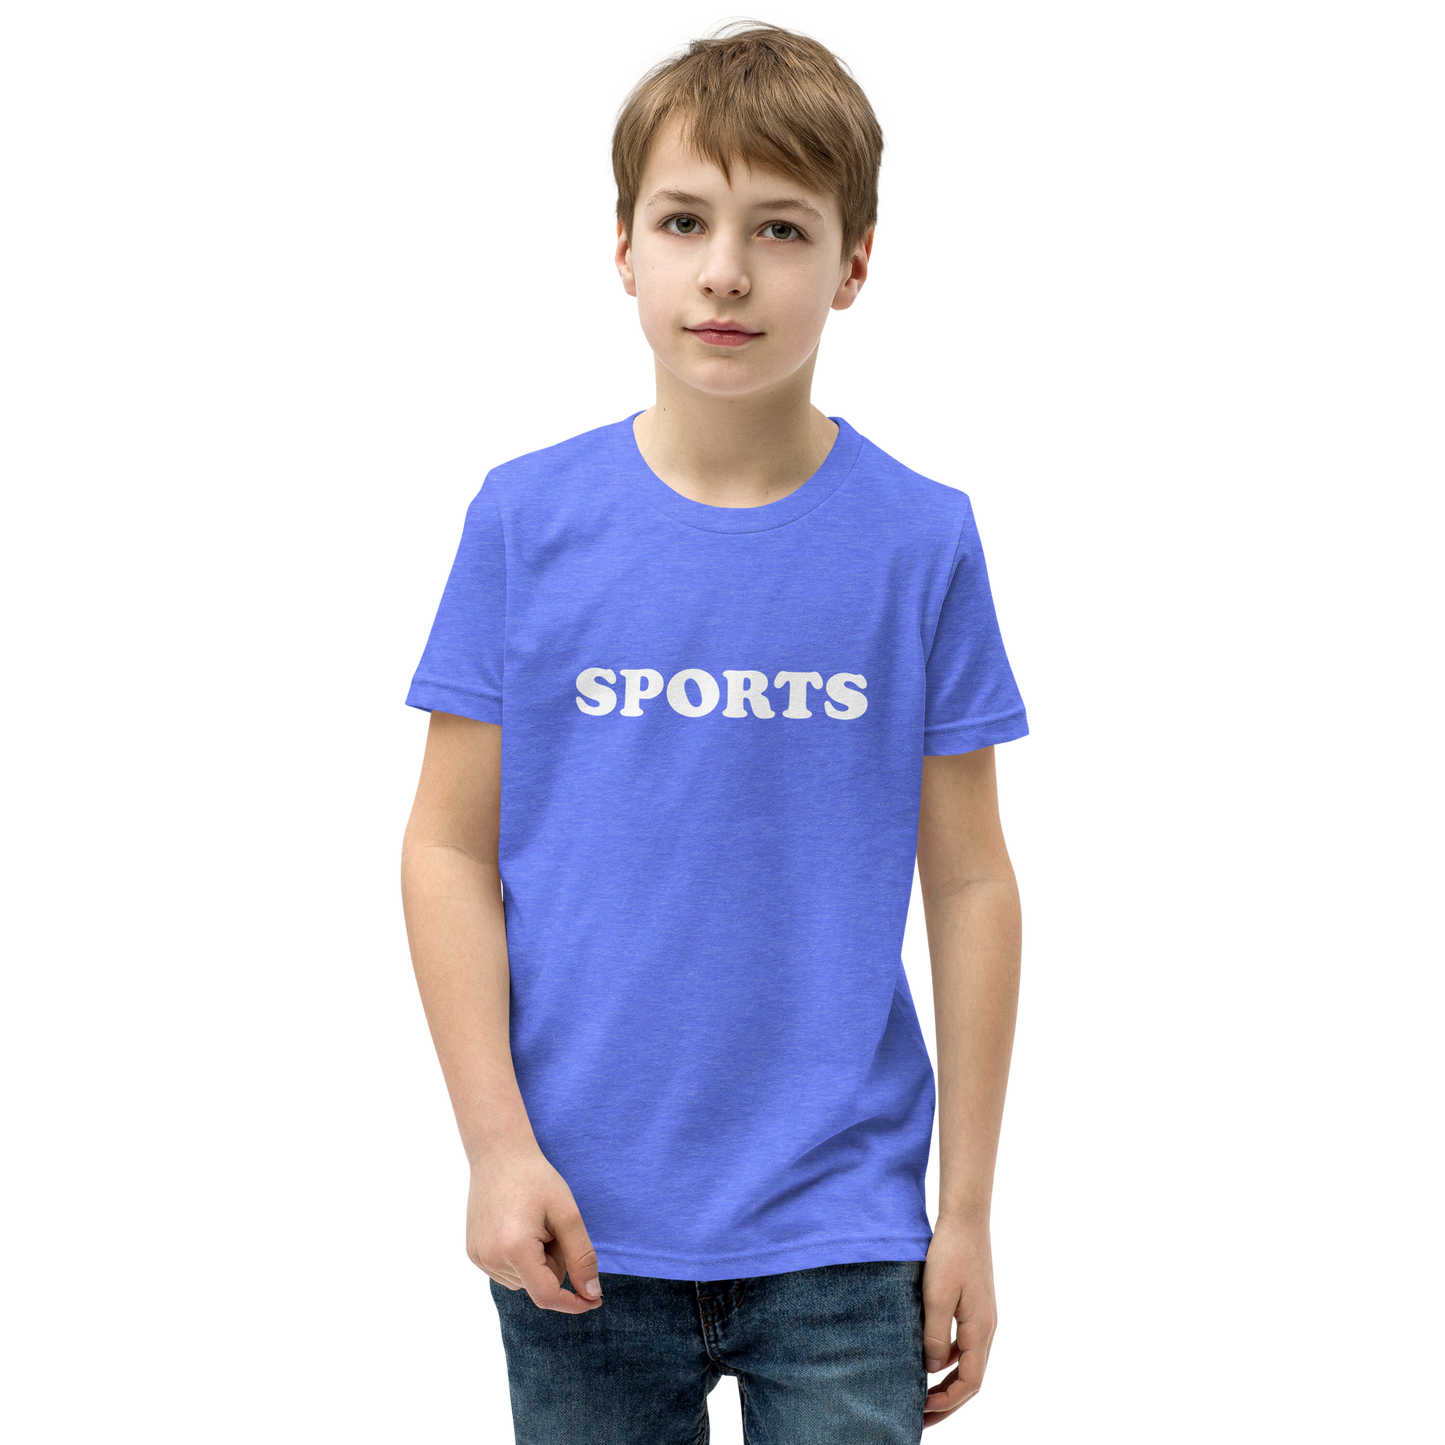 SPORTS Youth Short Sleeve T-Shirt